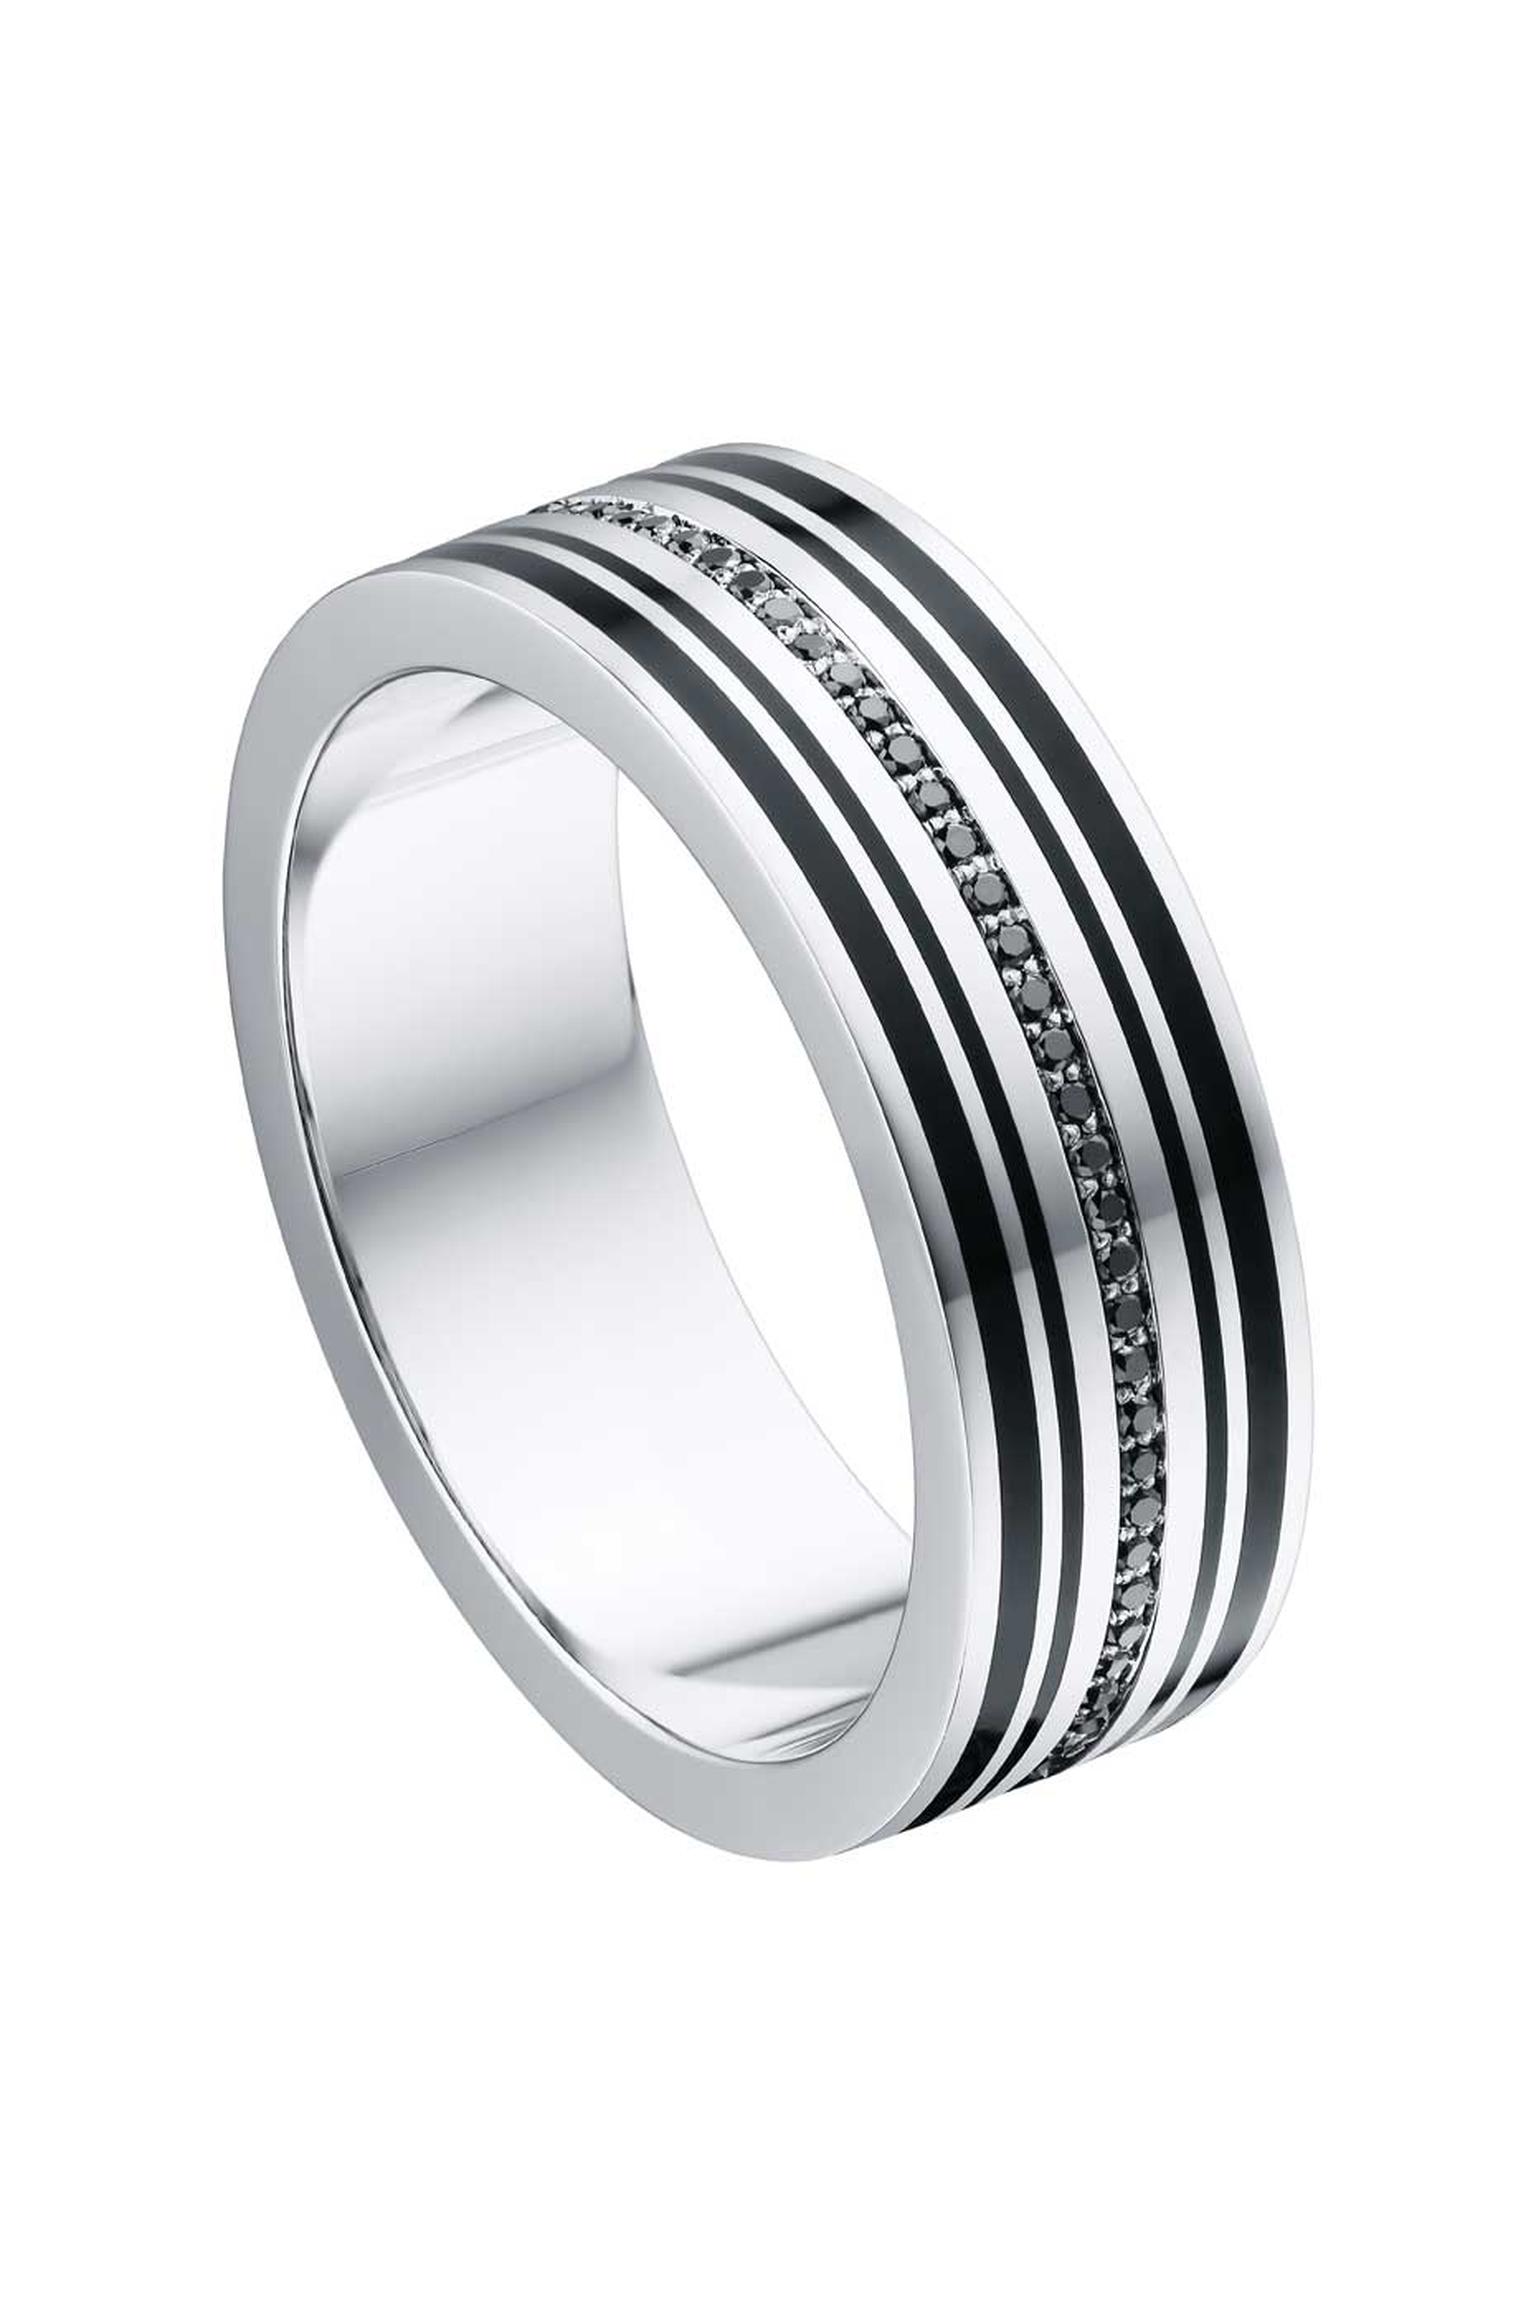 Alexander Arne ring for men in white gold and enamel with black diamonds.